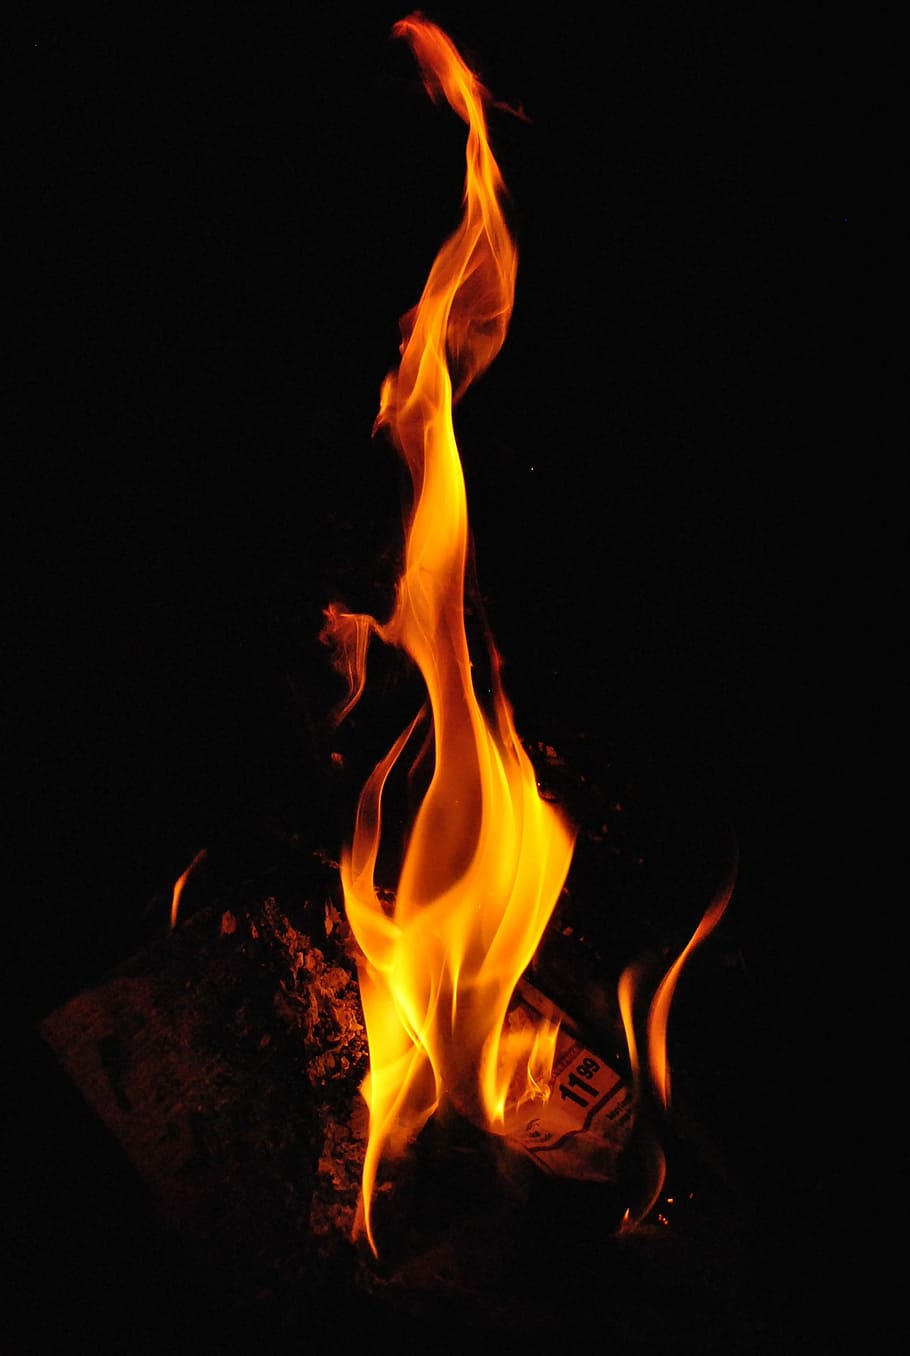 fireplace photography, fireplace, photography, fire, flames, burning, heat, hot, yellow, orange